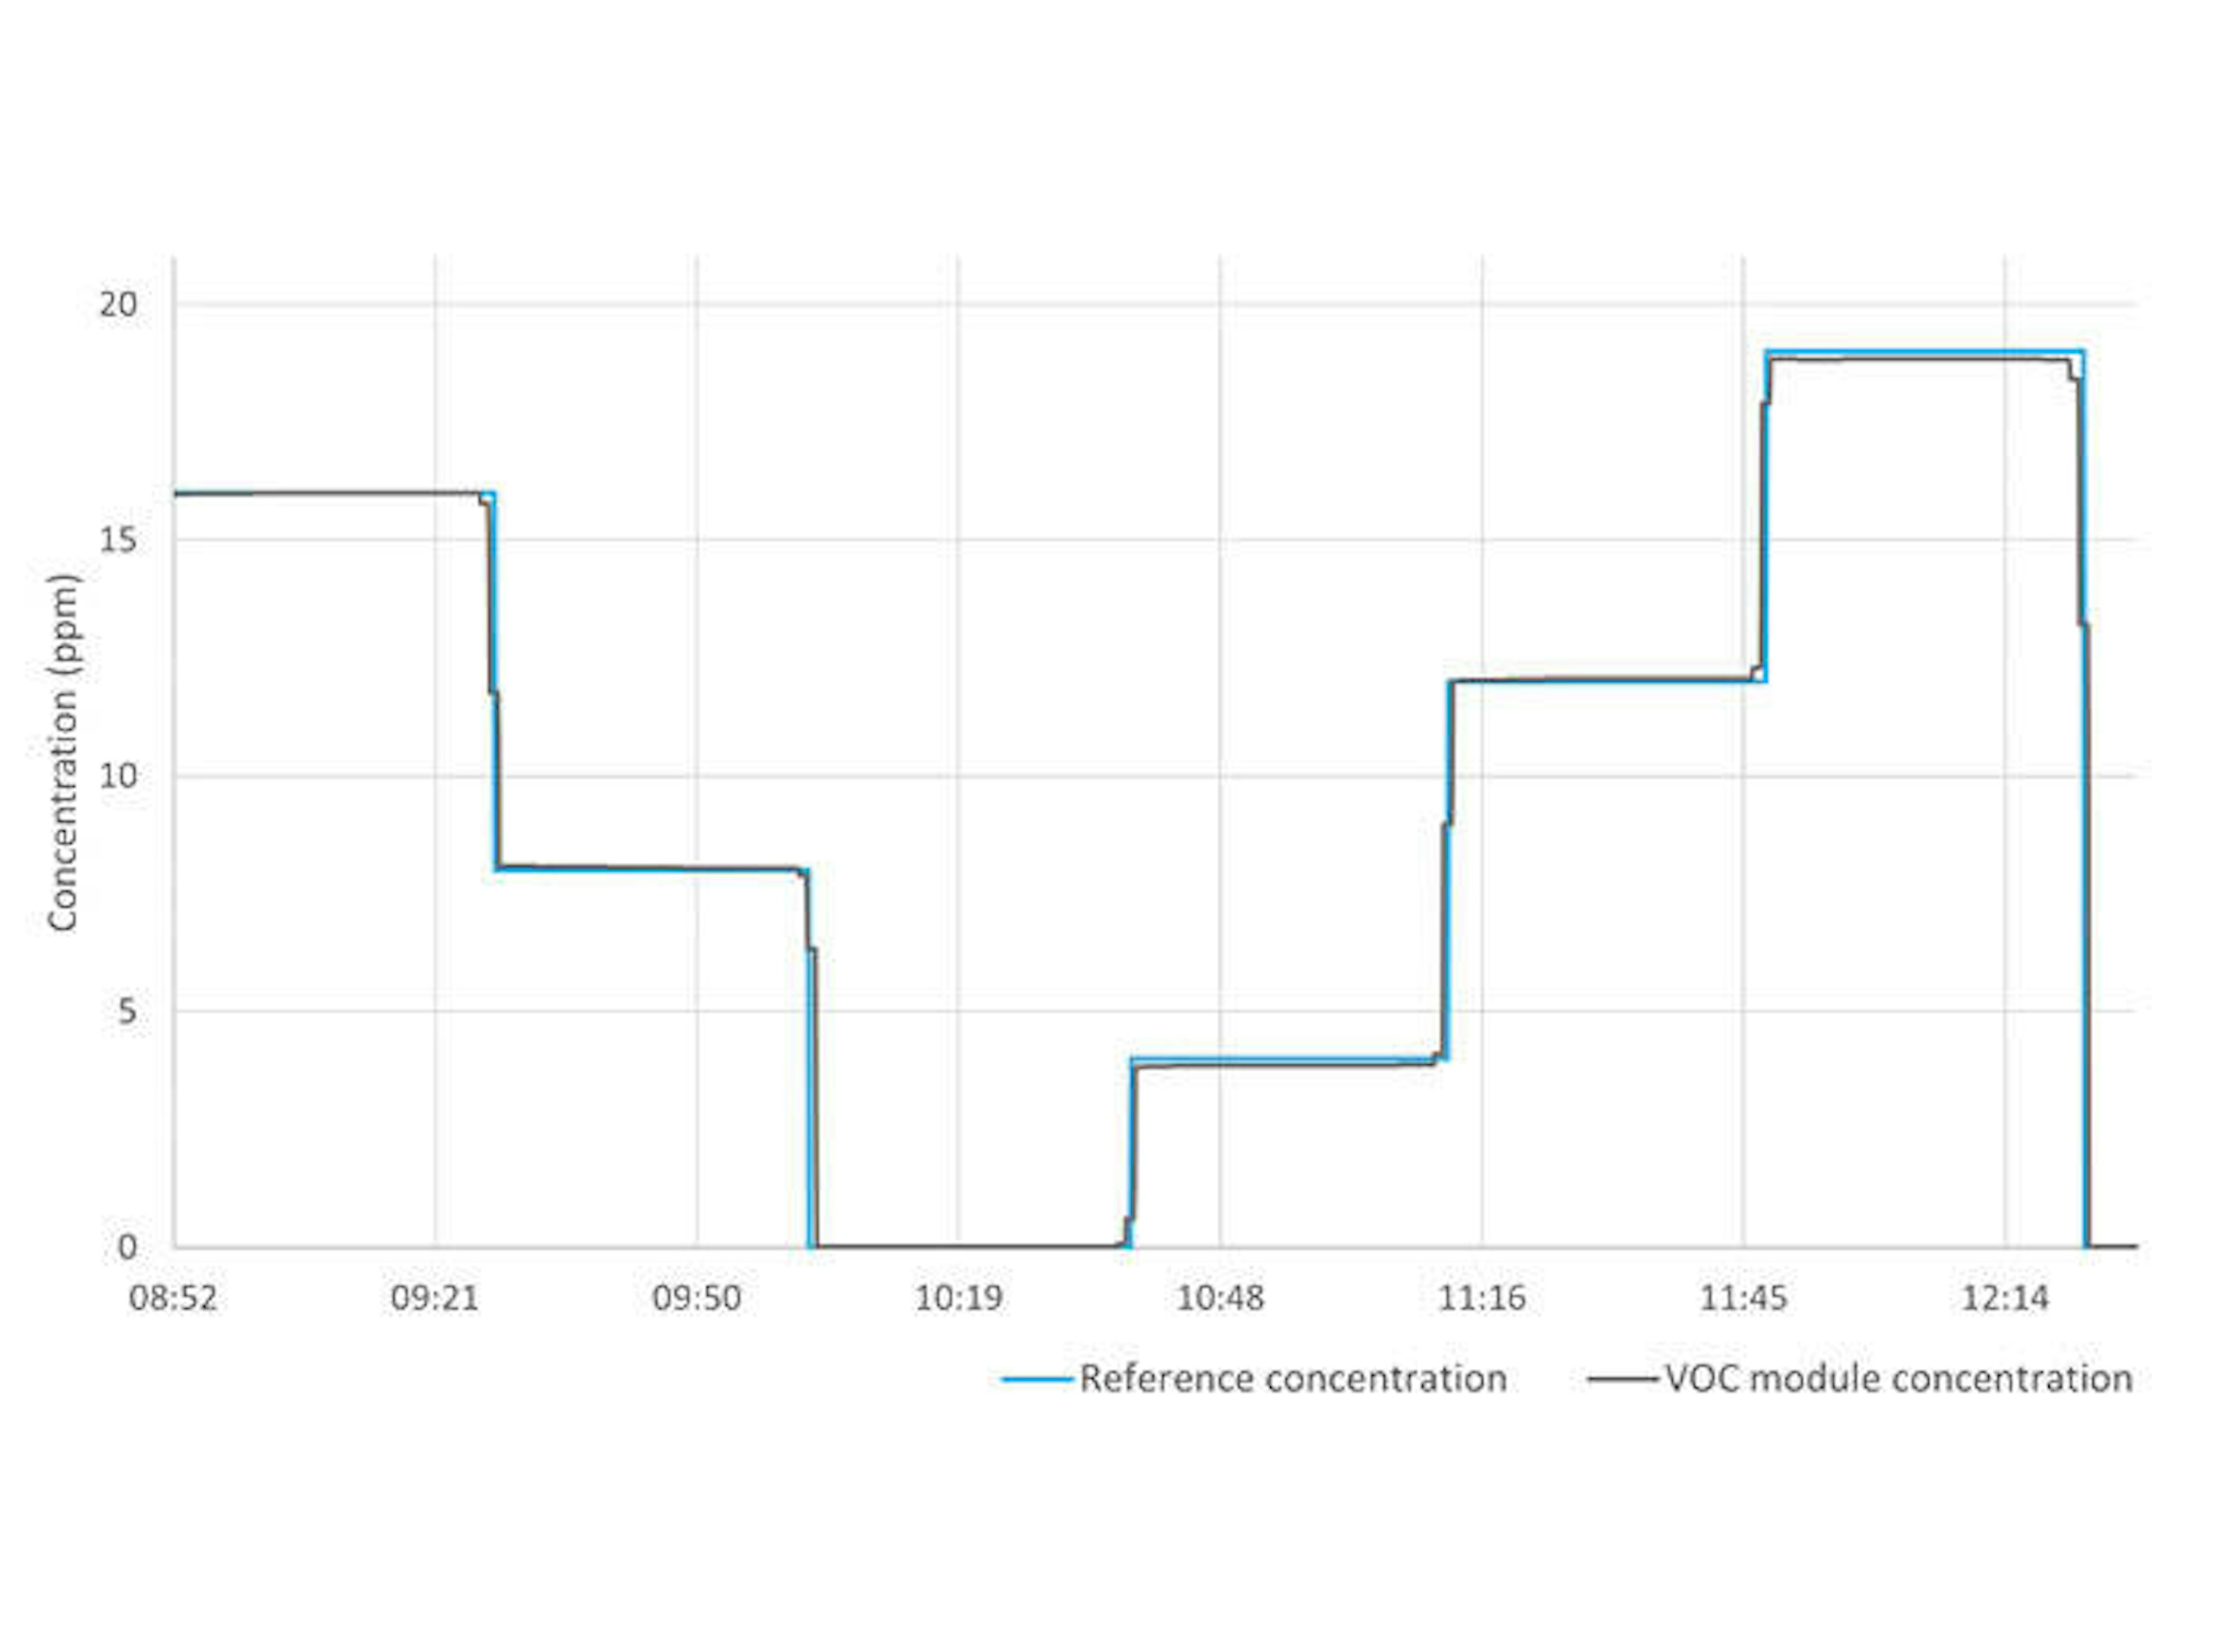 VOC module high range time series plot